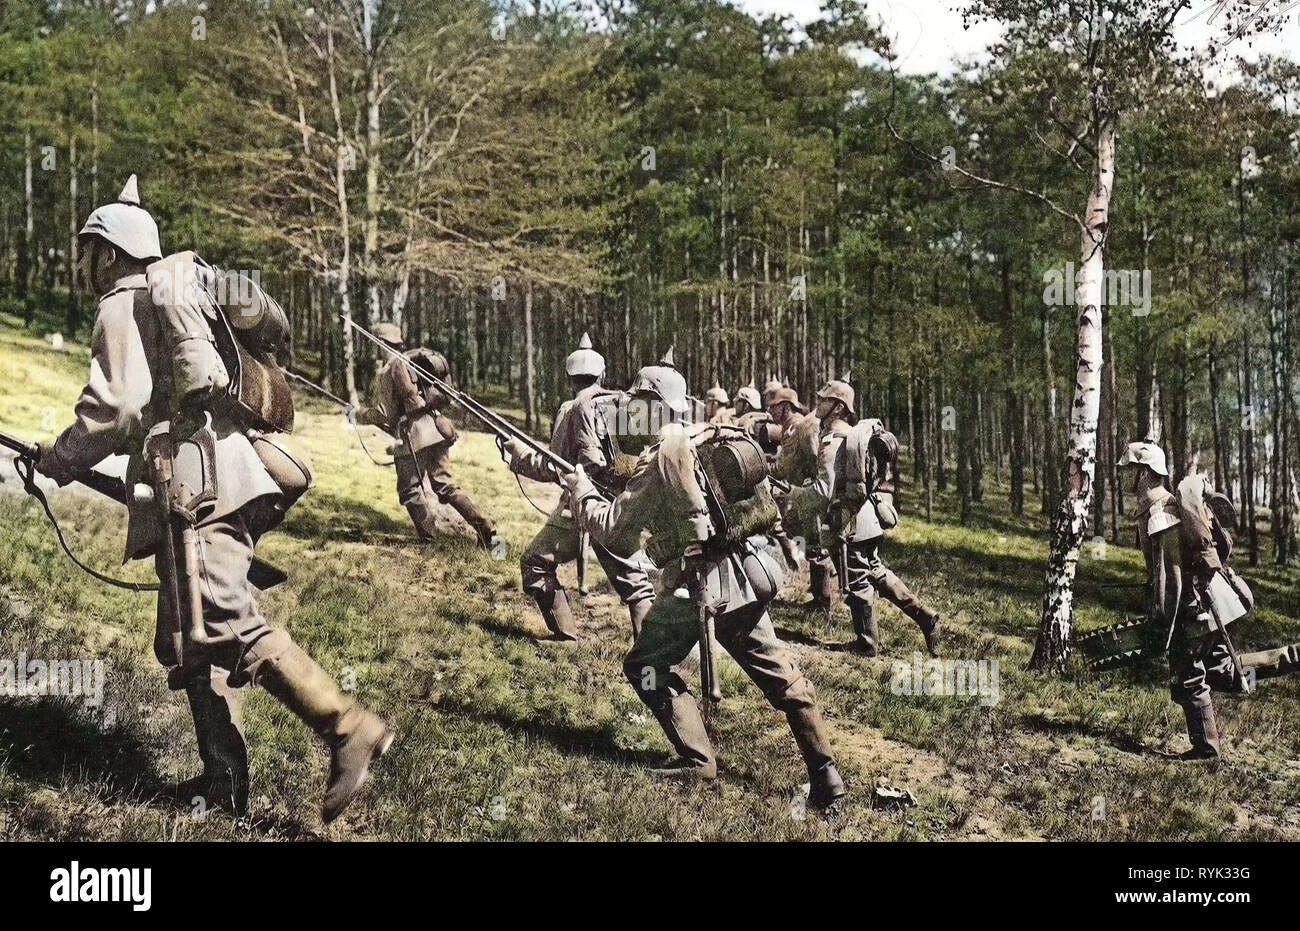 12. Königlich Sächsisches Infanterie-Regiment Nr. 177, los tambores militares, uso de armas, fusiles Mauser, Pickelhaube de Alemania, retratos de grupo con 10 personas de 1914, Dresde, beim Sturmangriff Schützen Foto de stock